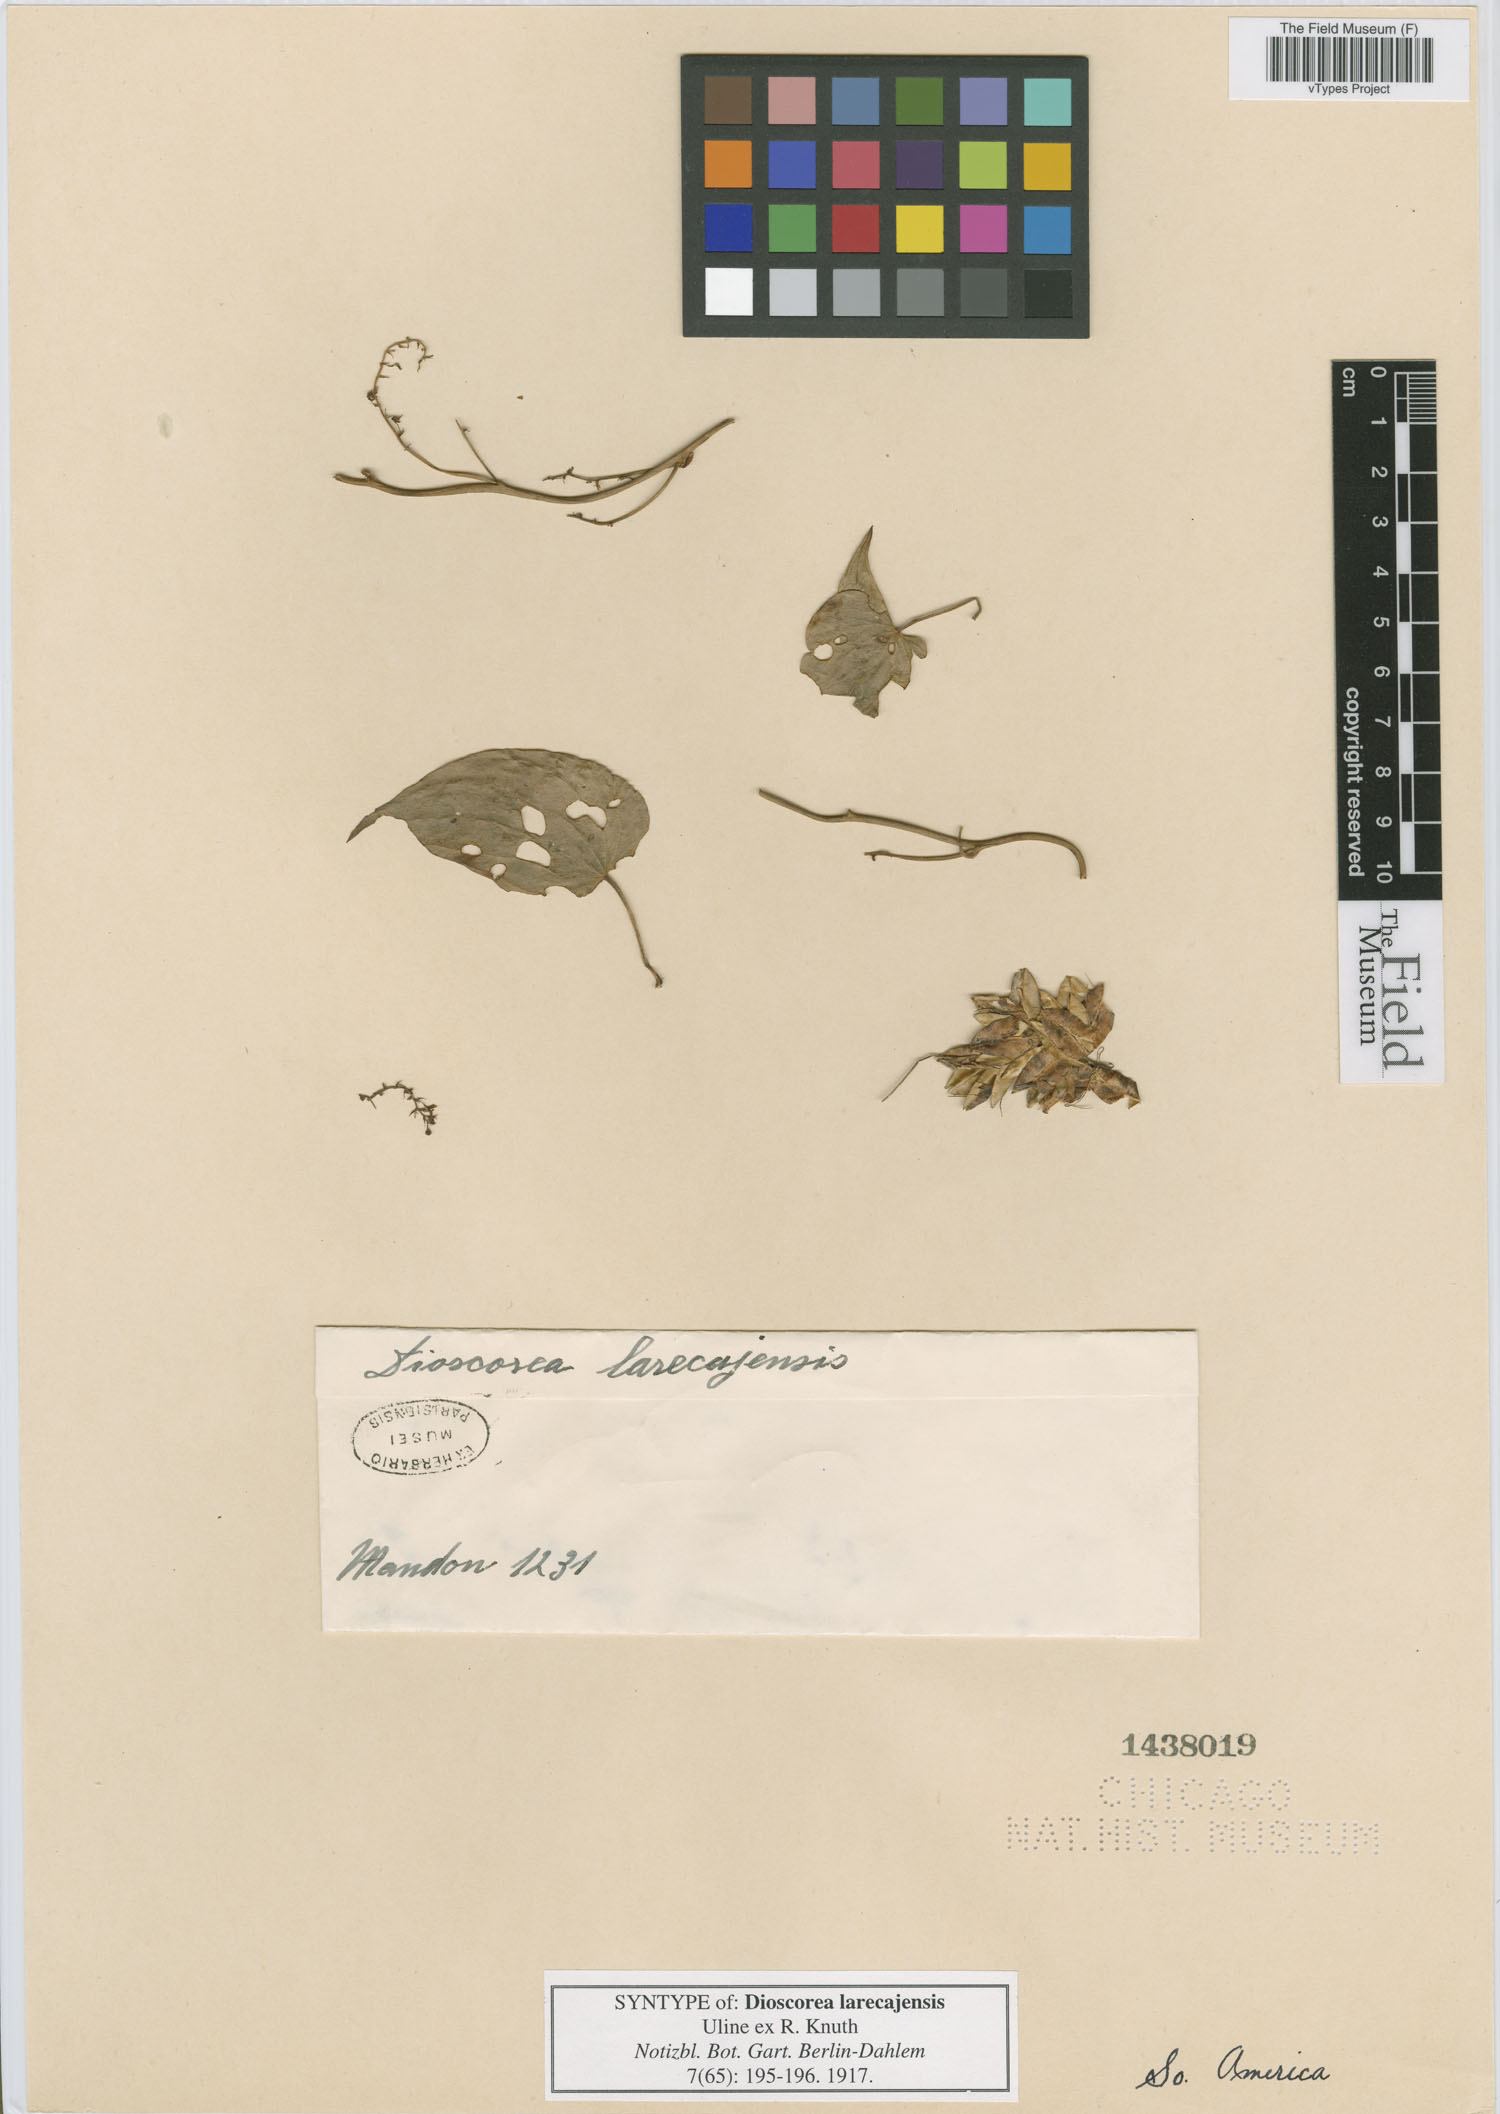 Dioscorea larecajensis image